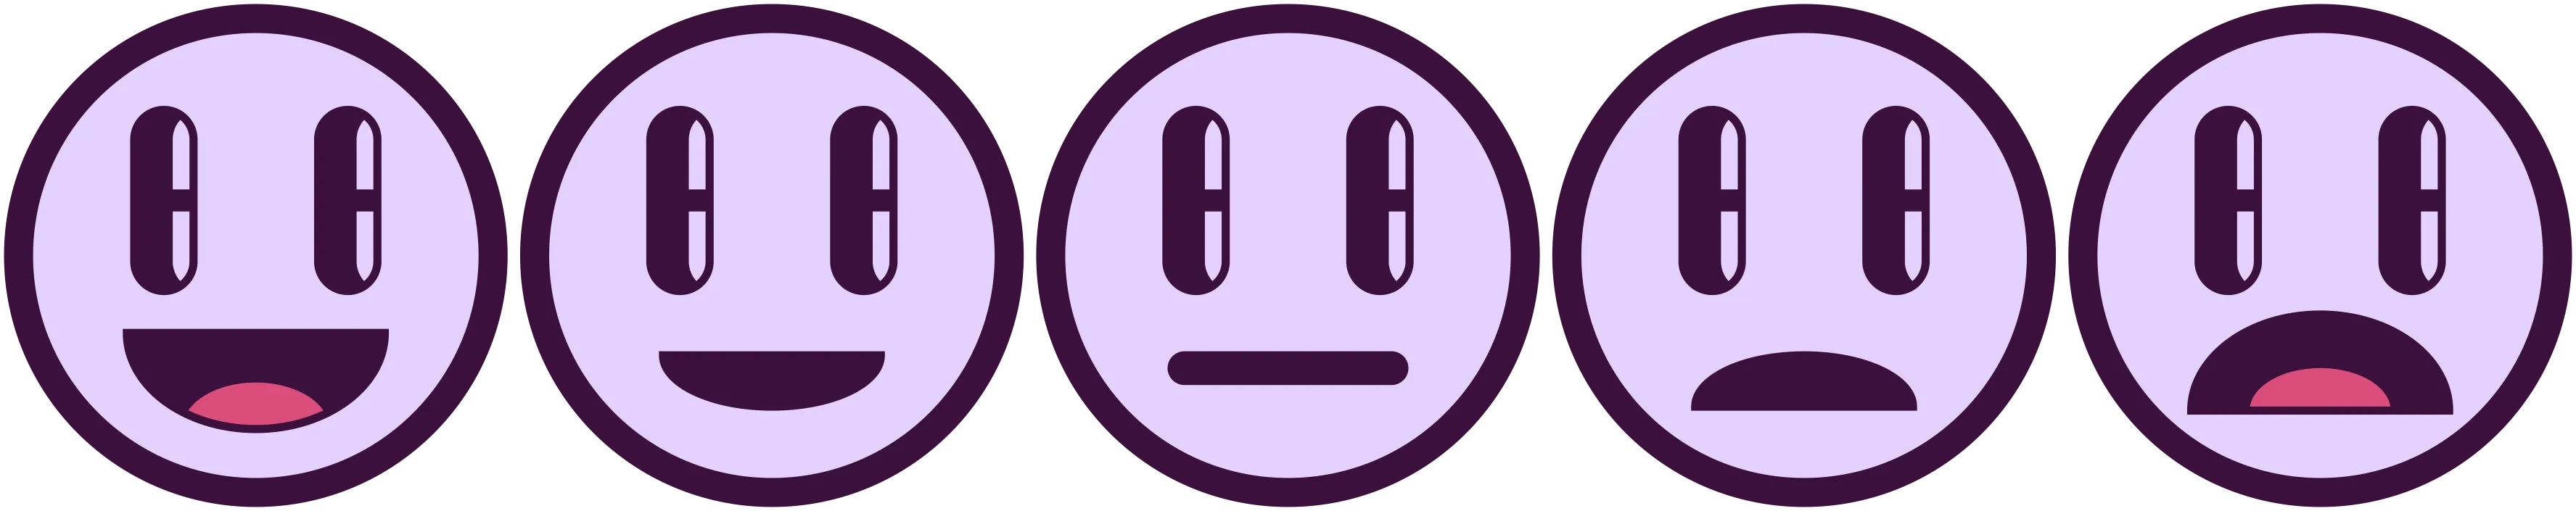 five purple emojis 